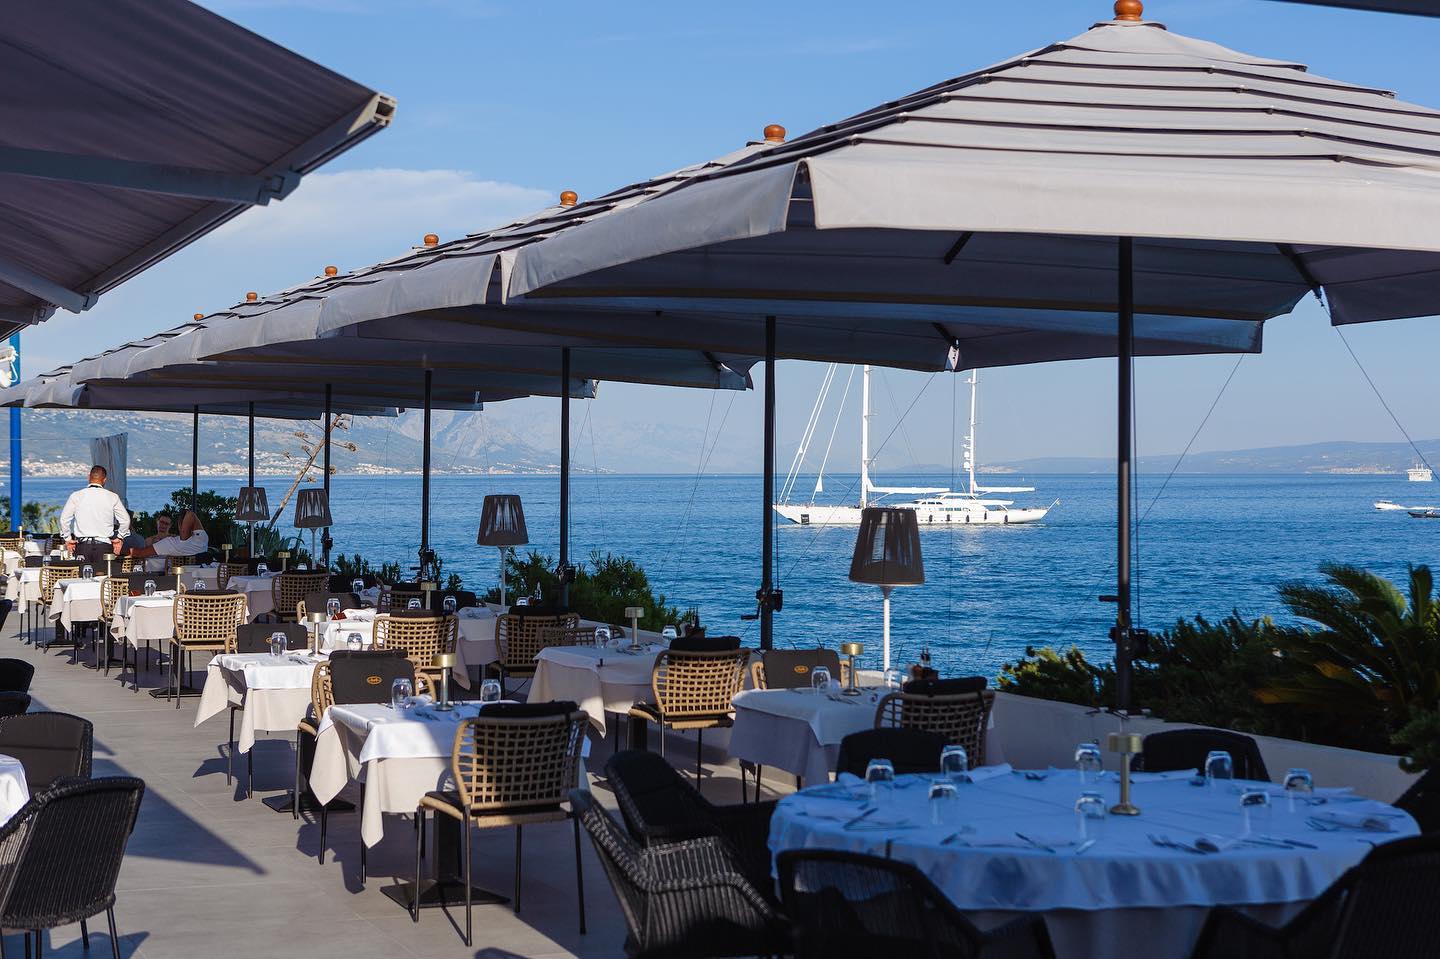 Restaurant Adriatic - Restaurants with a view in Split